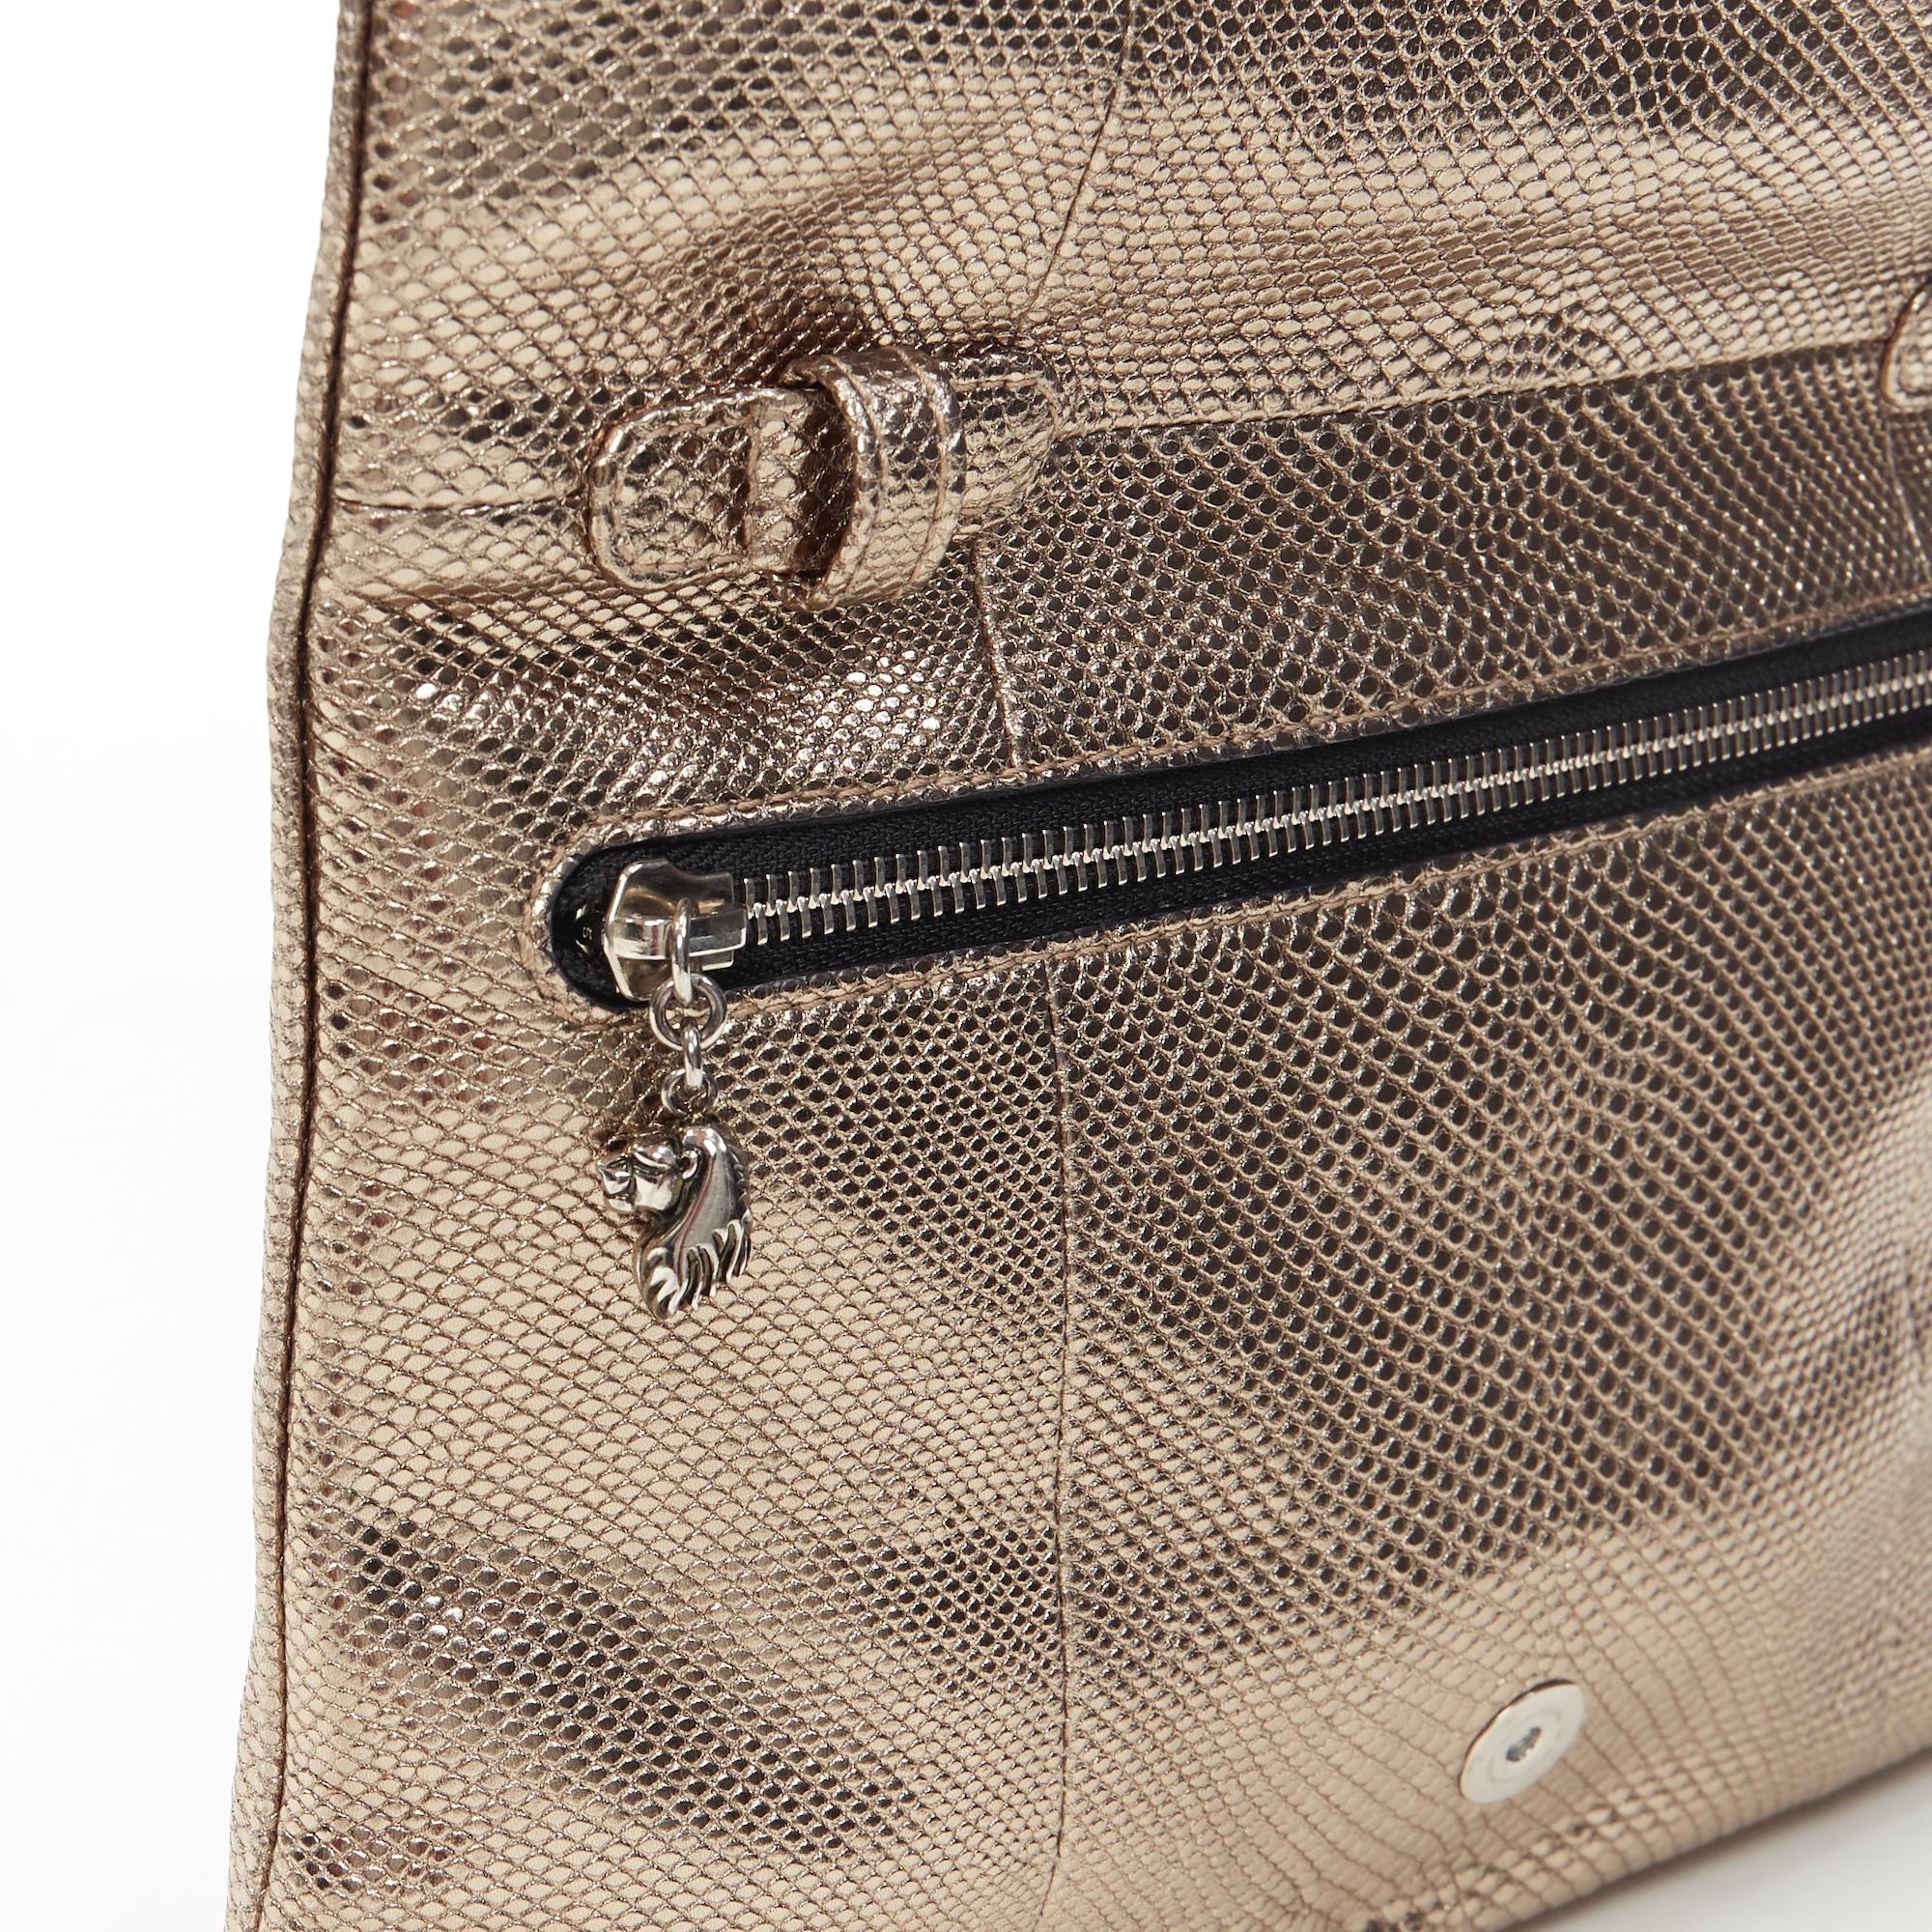 Beige BVLGARI metallic gold leather silver buckle foldover shoulder chain clutch bag